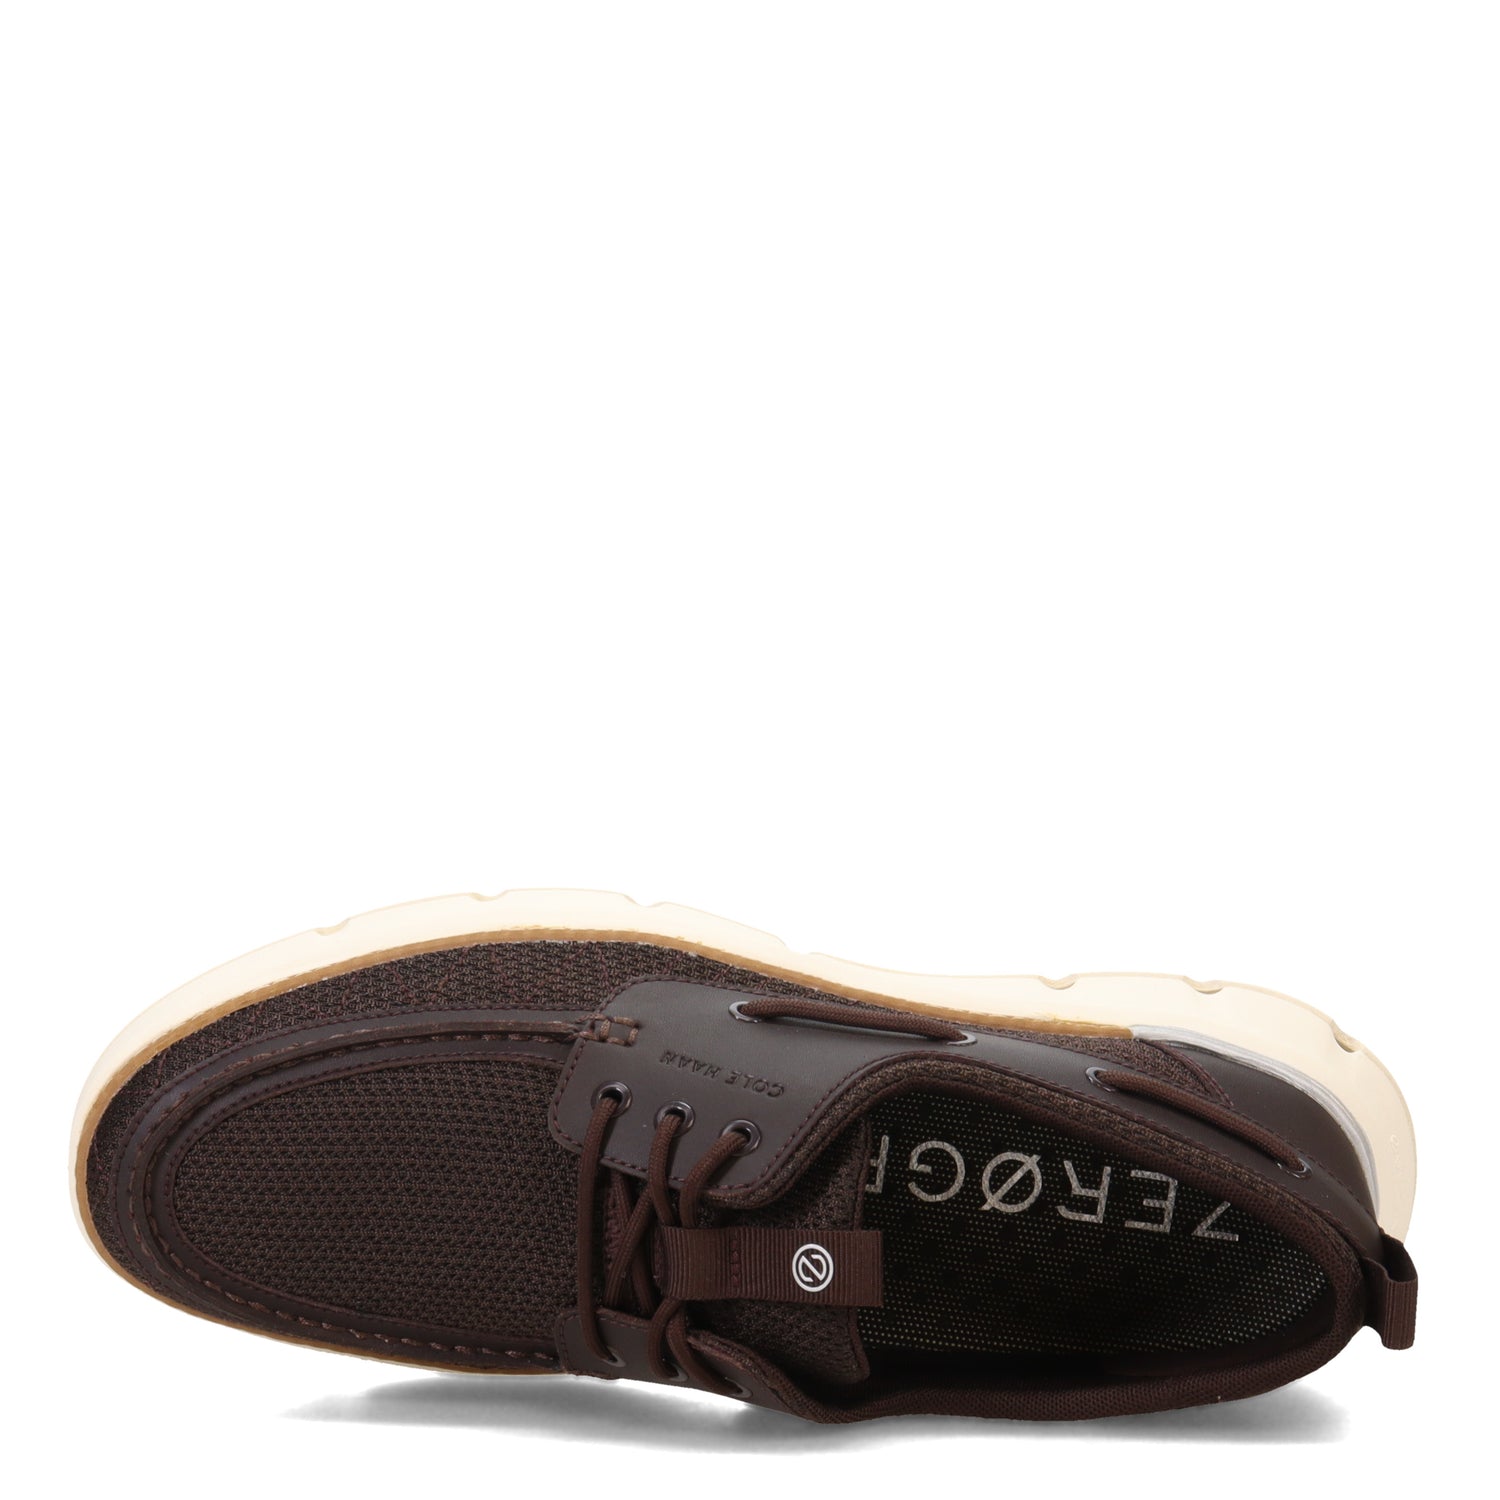 Reel Legends Boat Shoe Leather Upper Casual Shoes for Men for sale